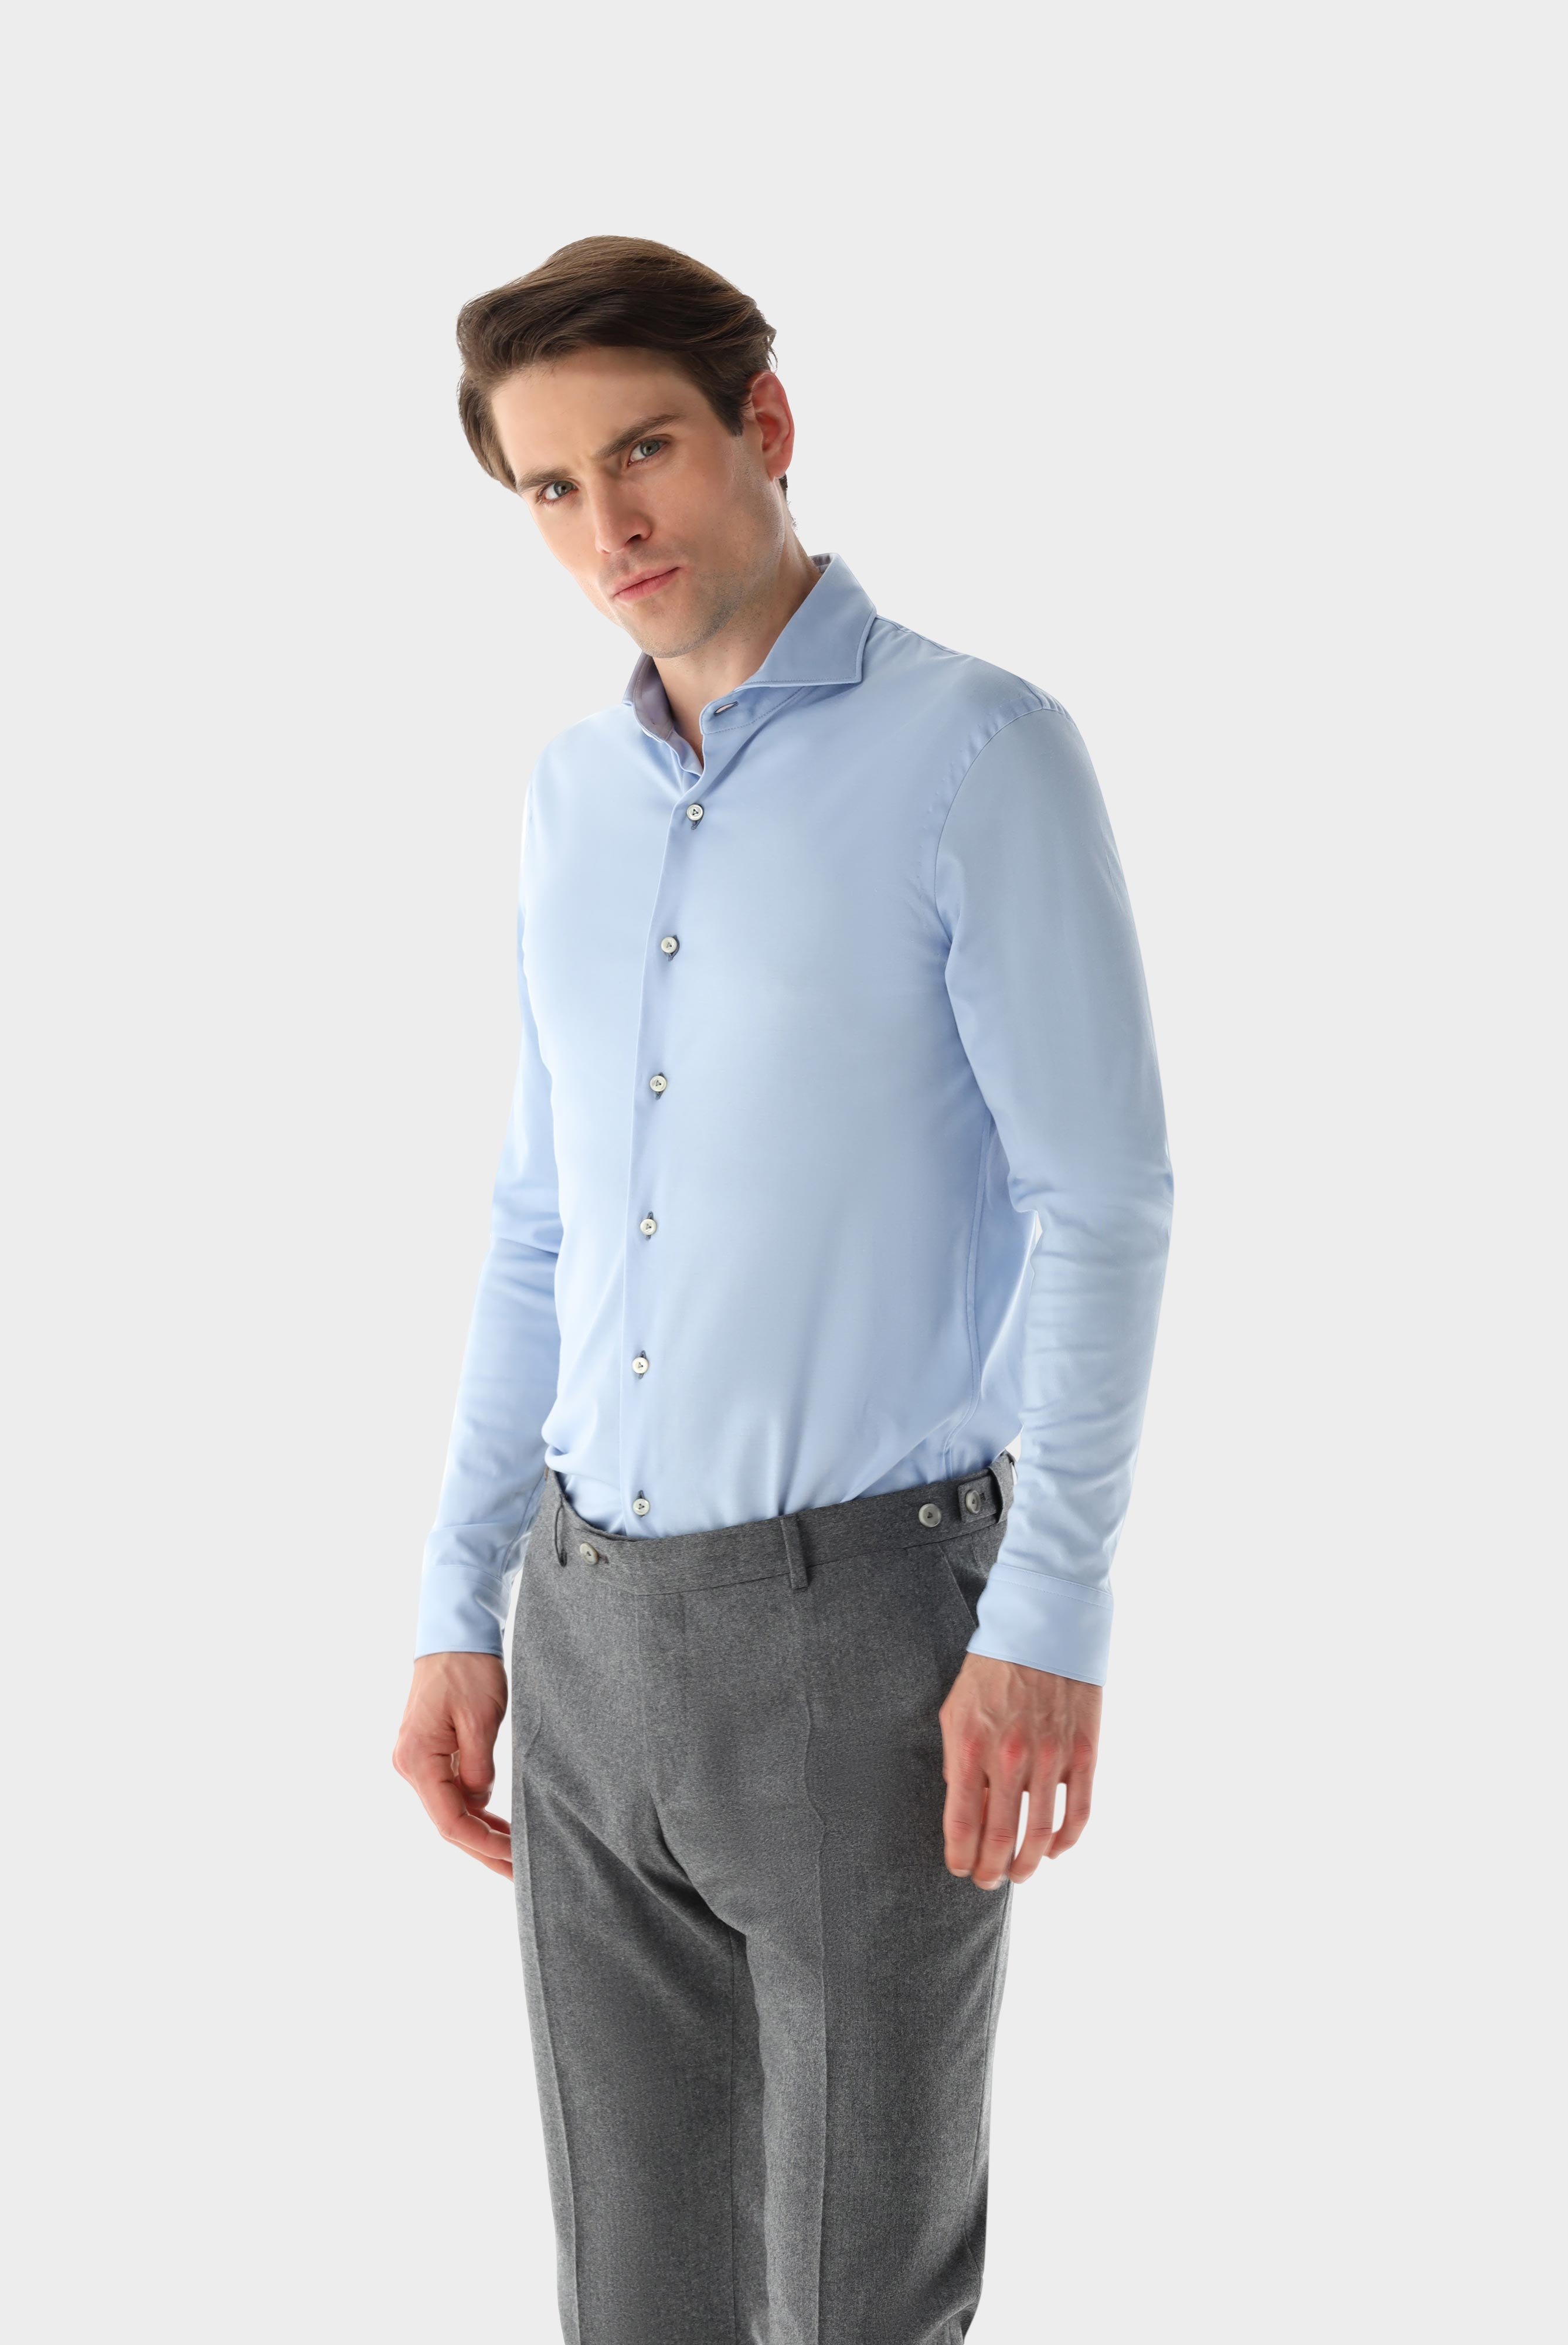 Casual Hemden+Jersey Hemd aus Schweizer Baumwolle Tailor Fit+20.1683.UC.180031.720.XXL